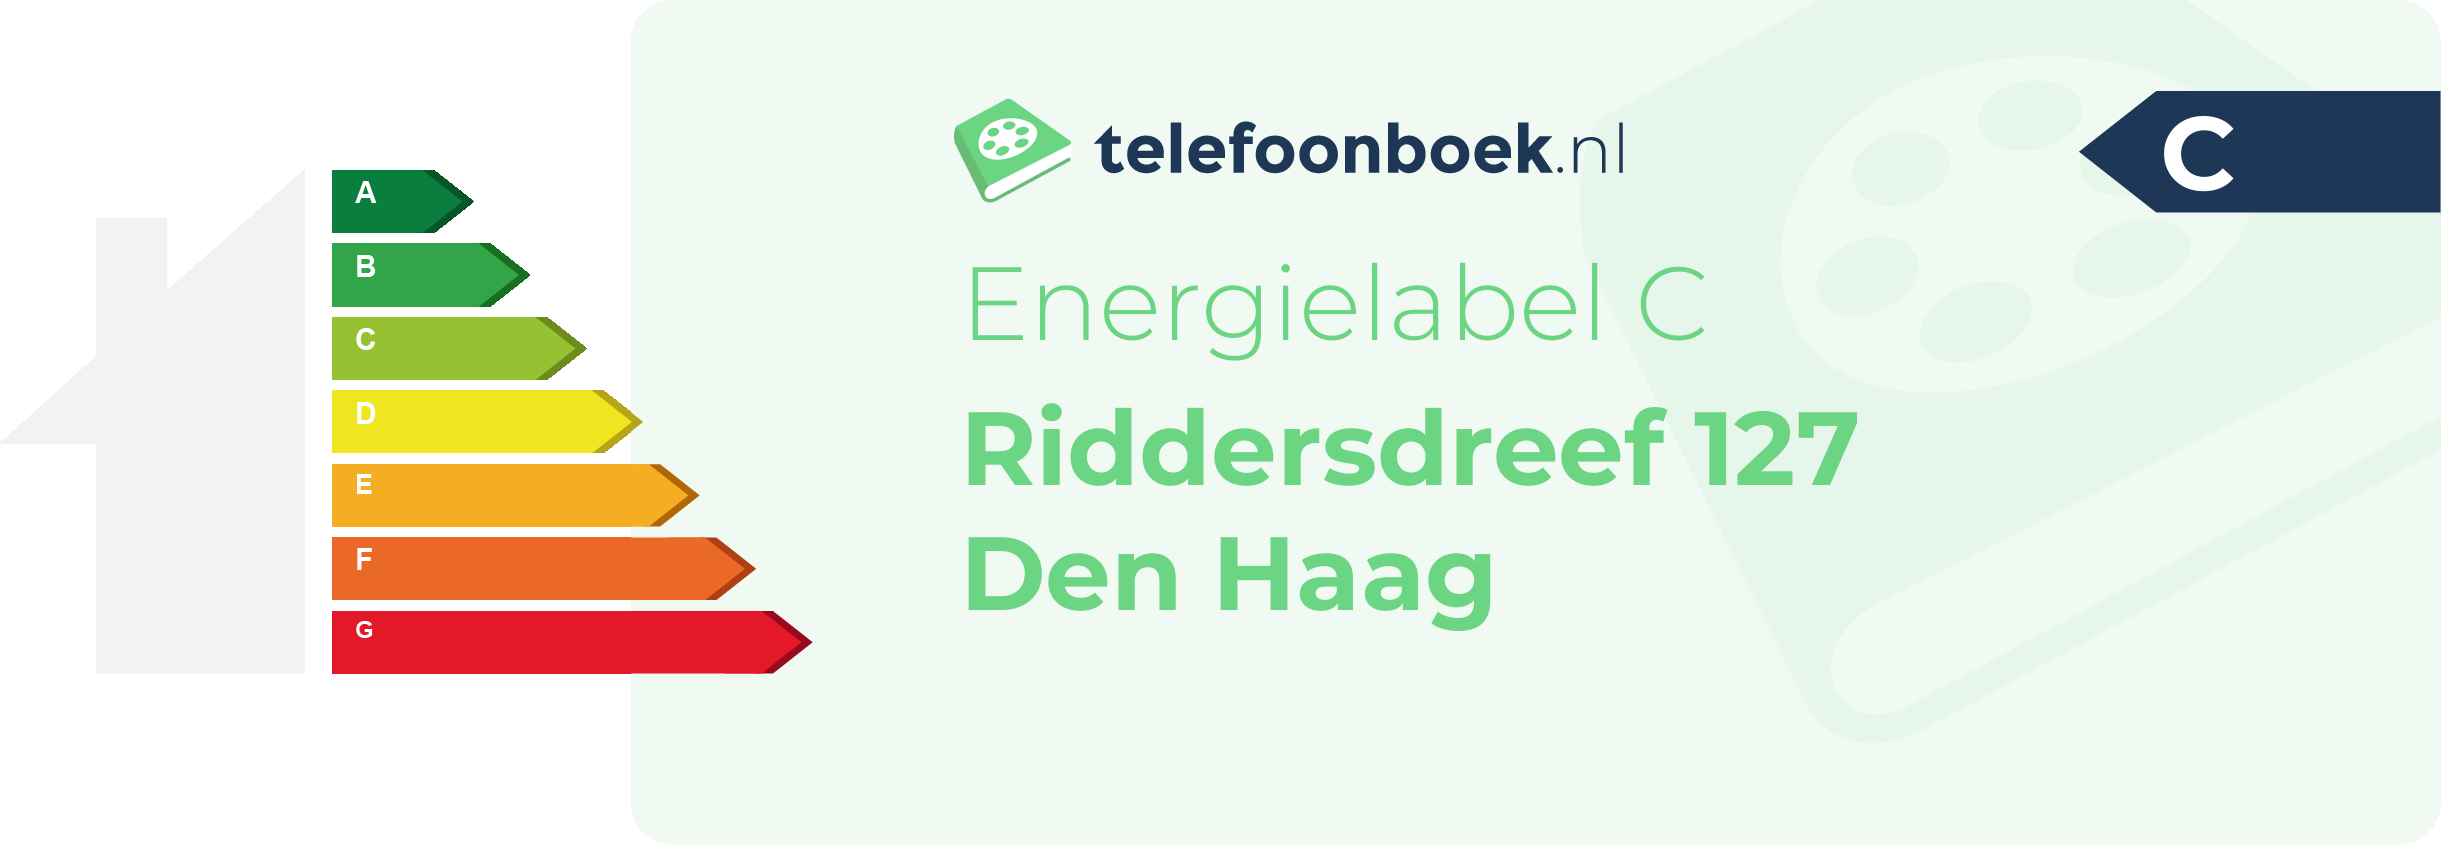 Energielabel Riddersdreef 127 Den Haag